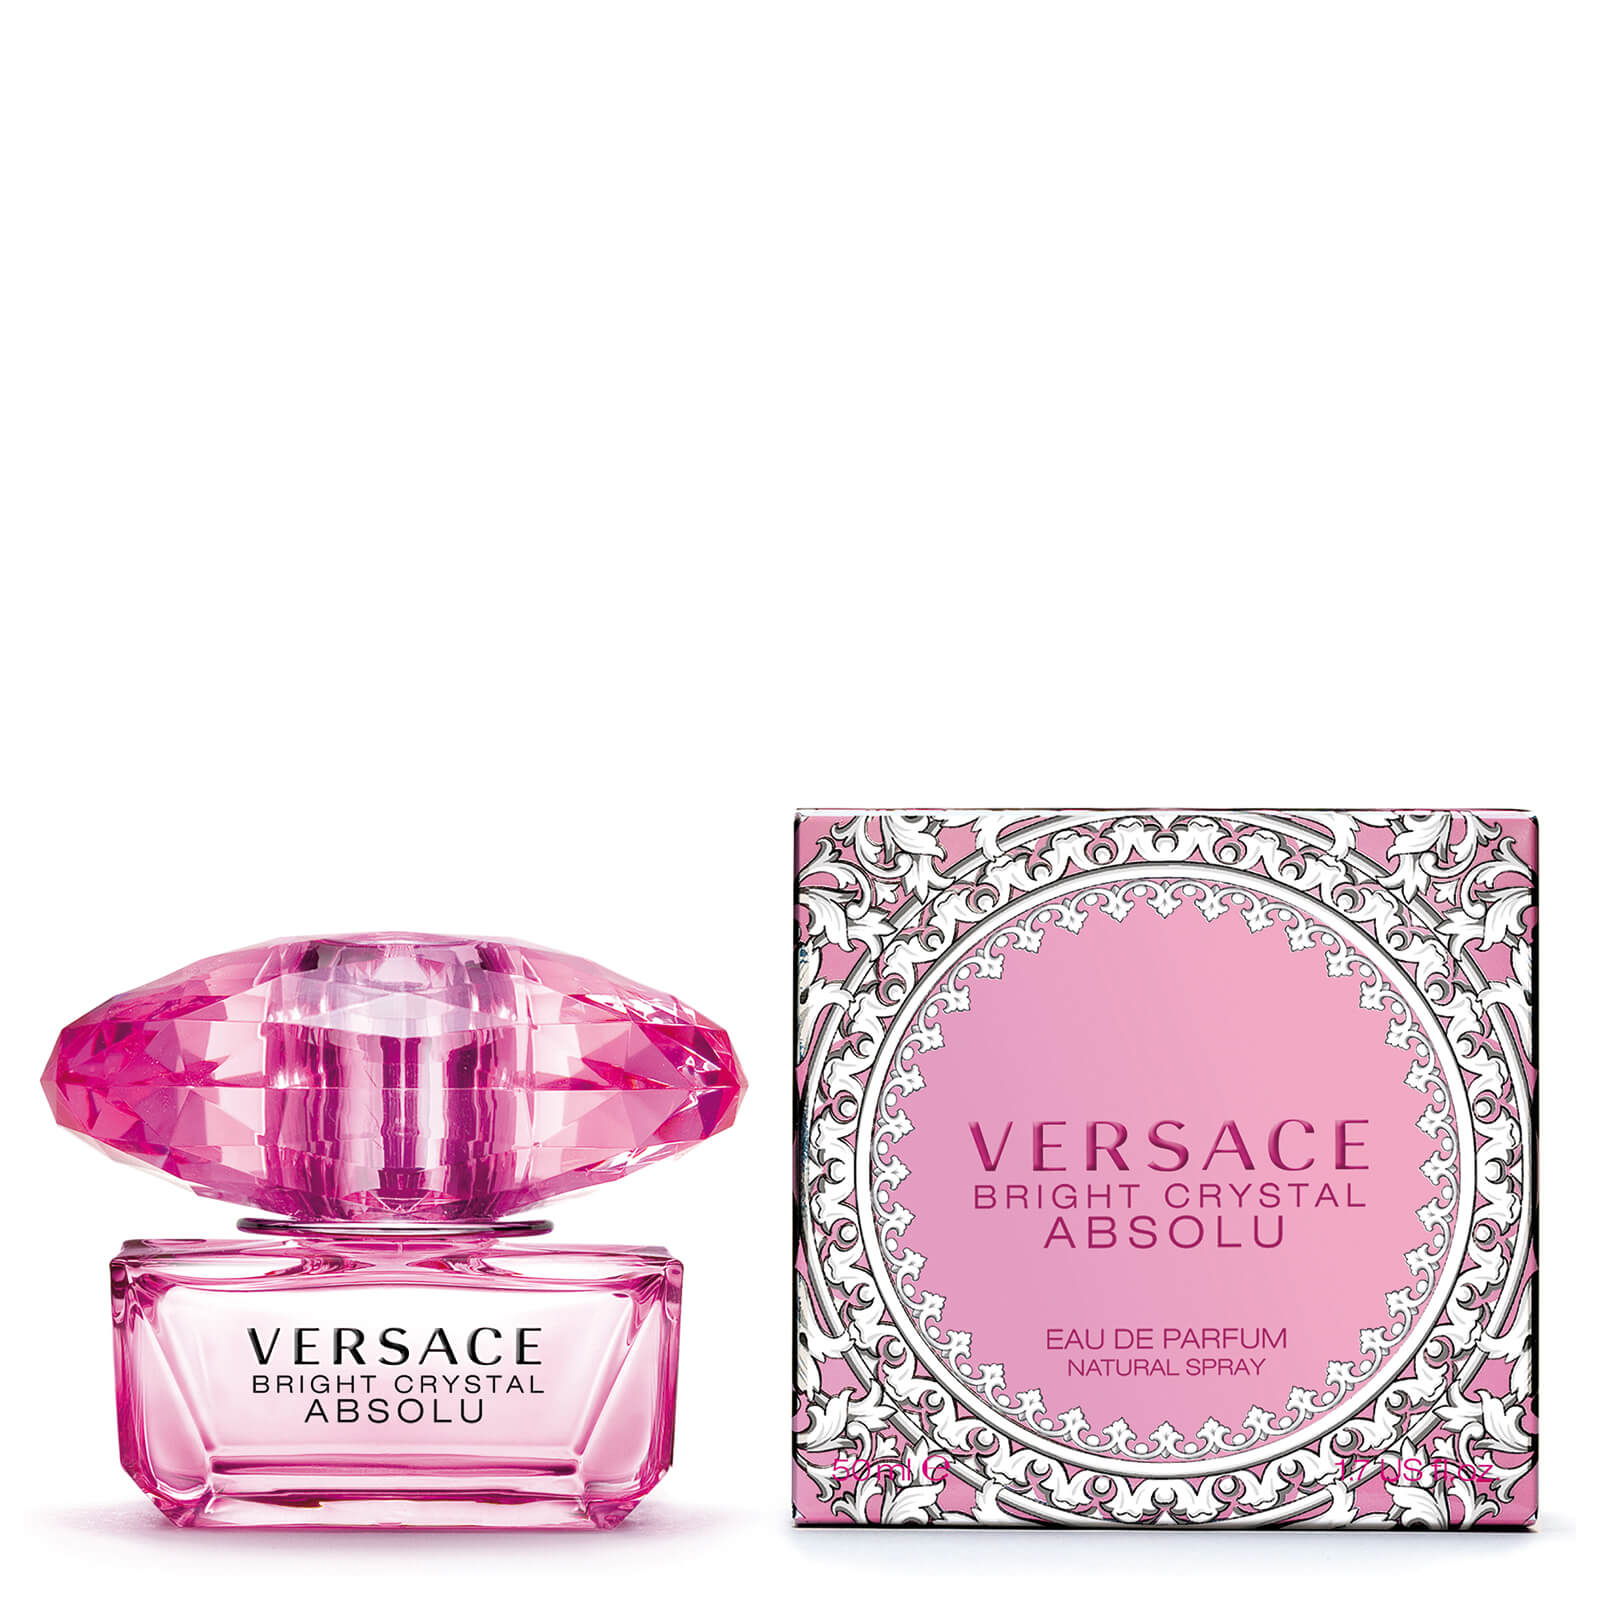 Versace Bright Crystal Absolu Eau de Parfum de 50 ml